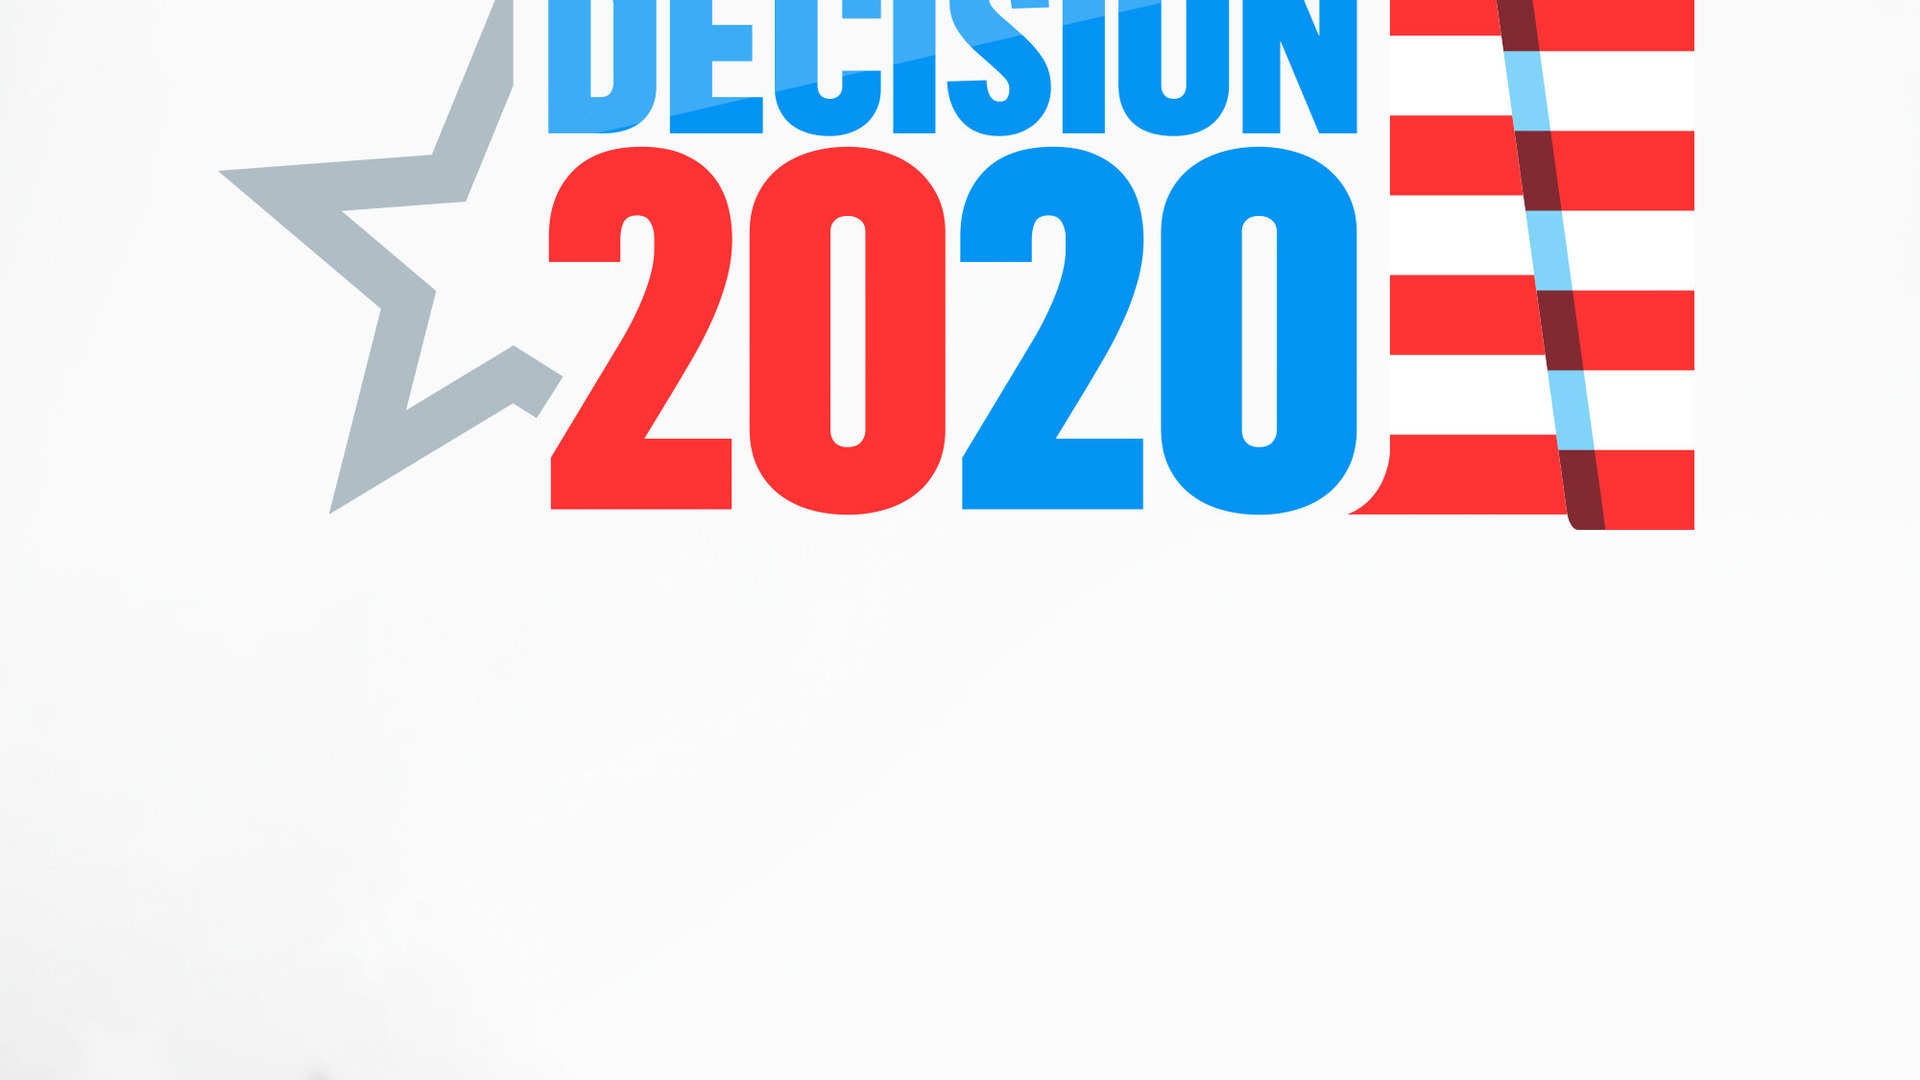 Show Decision 2020